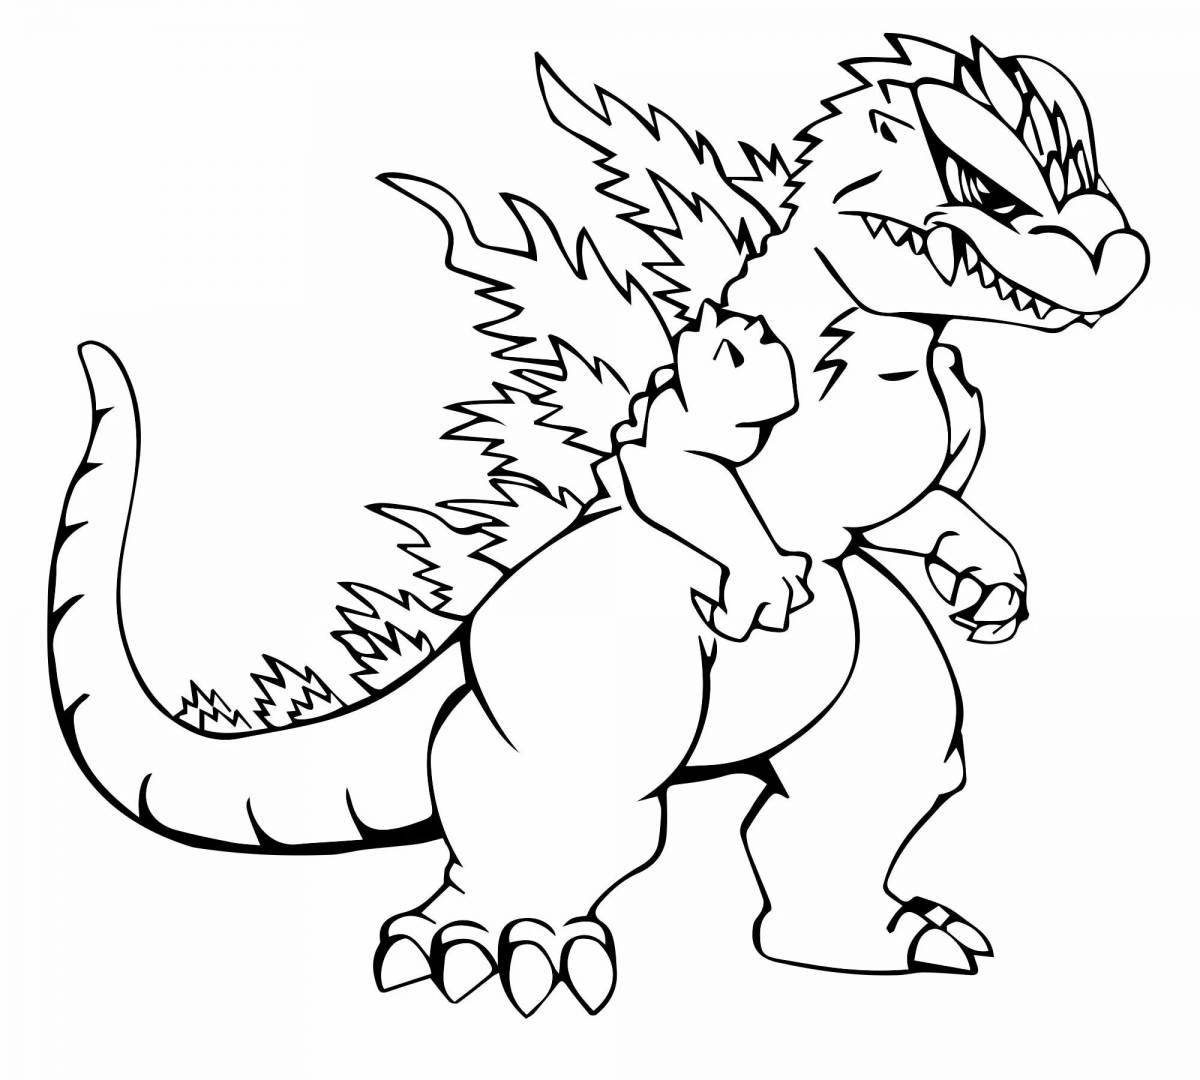 Glorious Godzilla and Kingidora coloring page